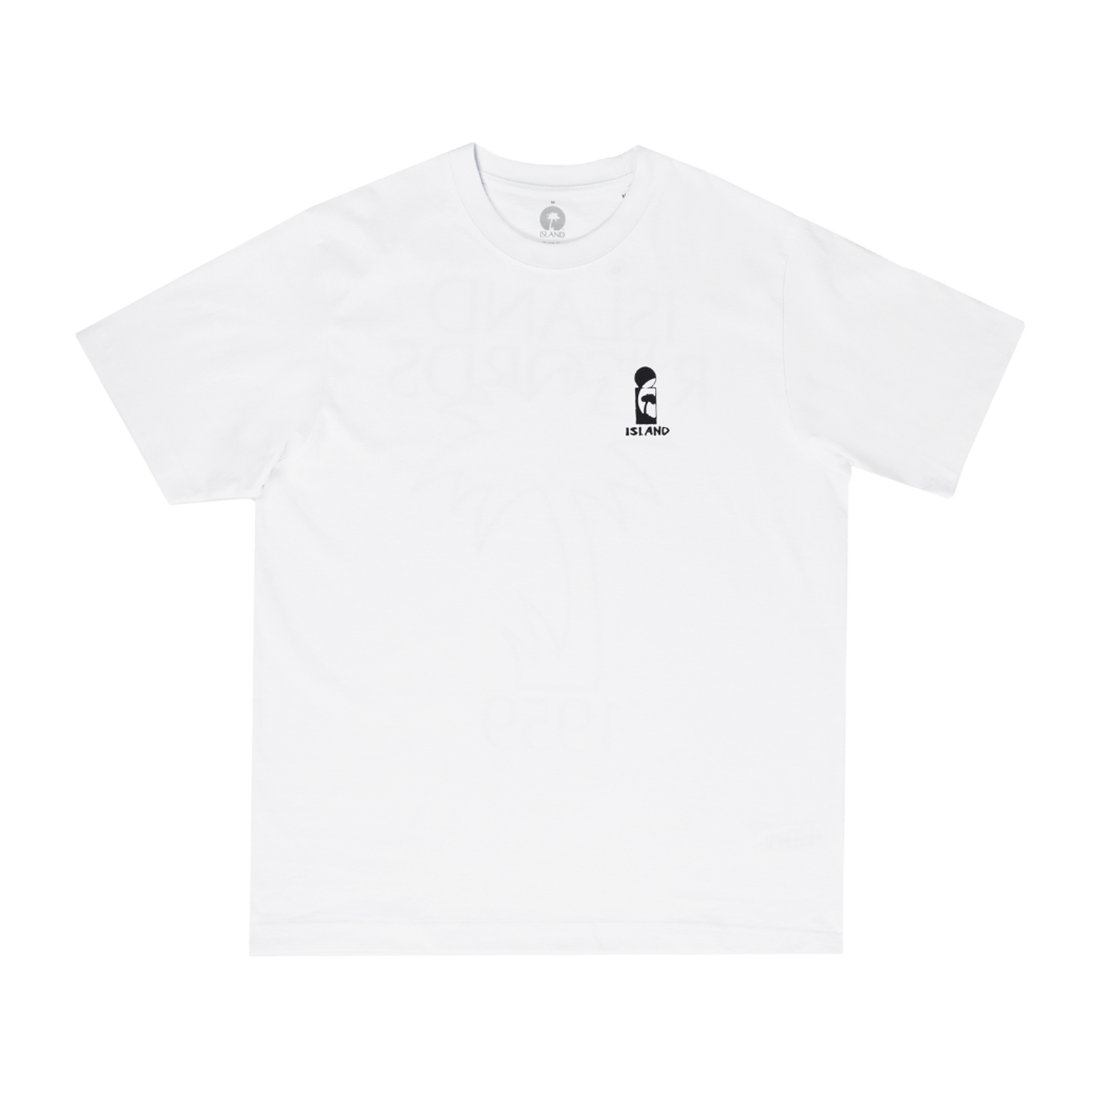 Island Records - White Label T-shirt